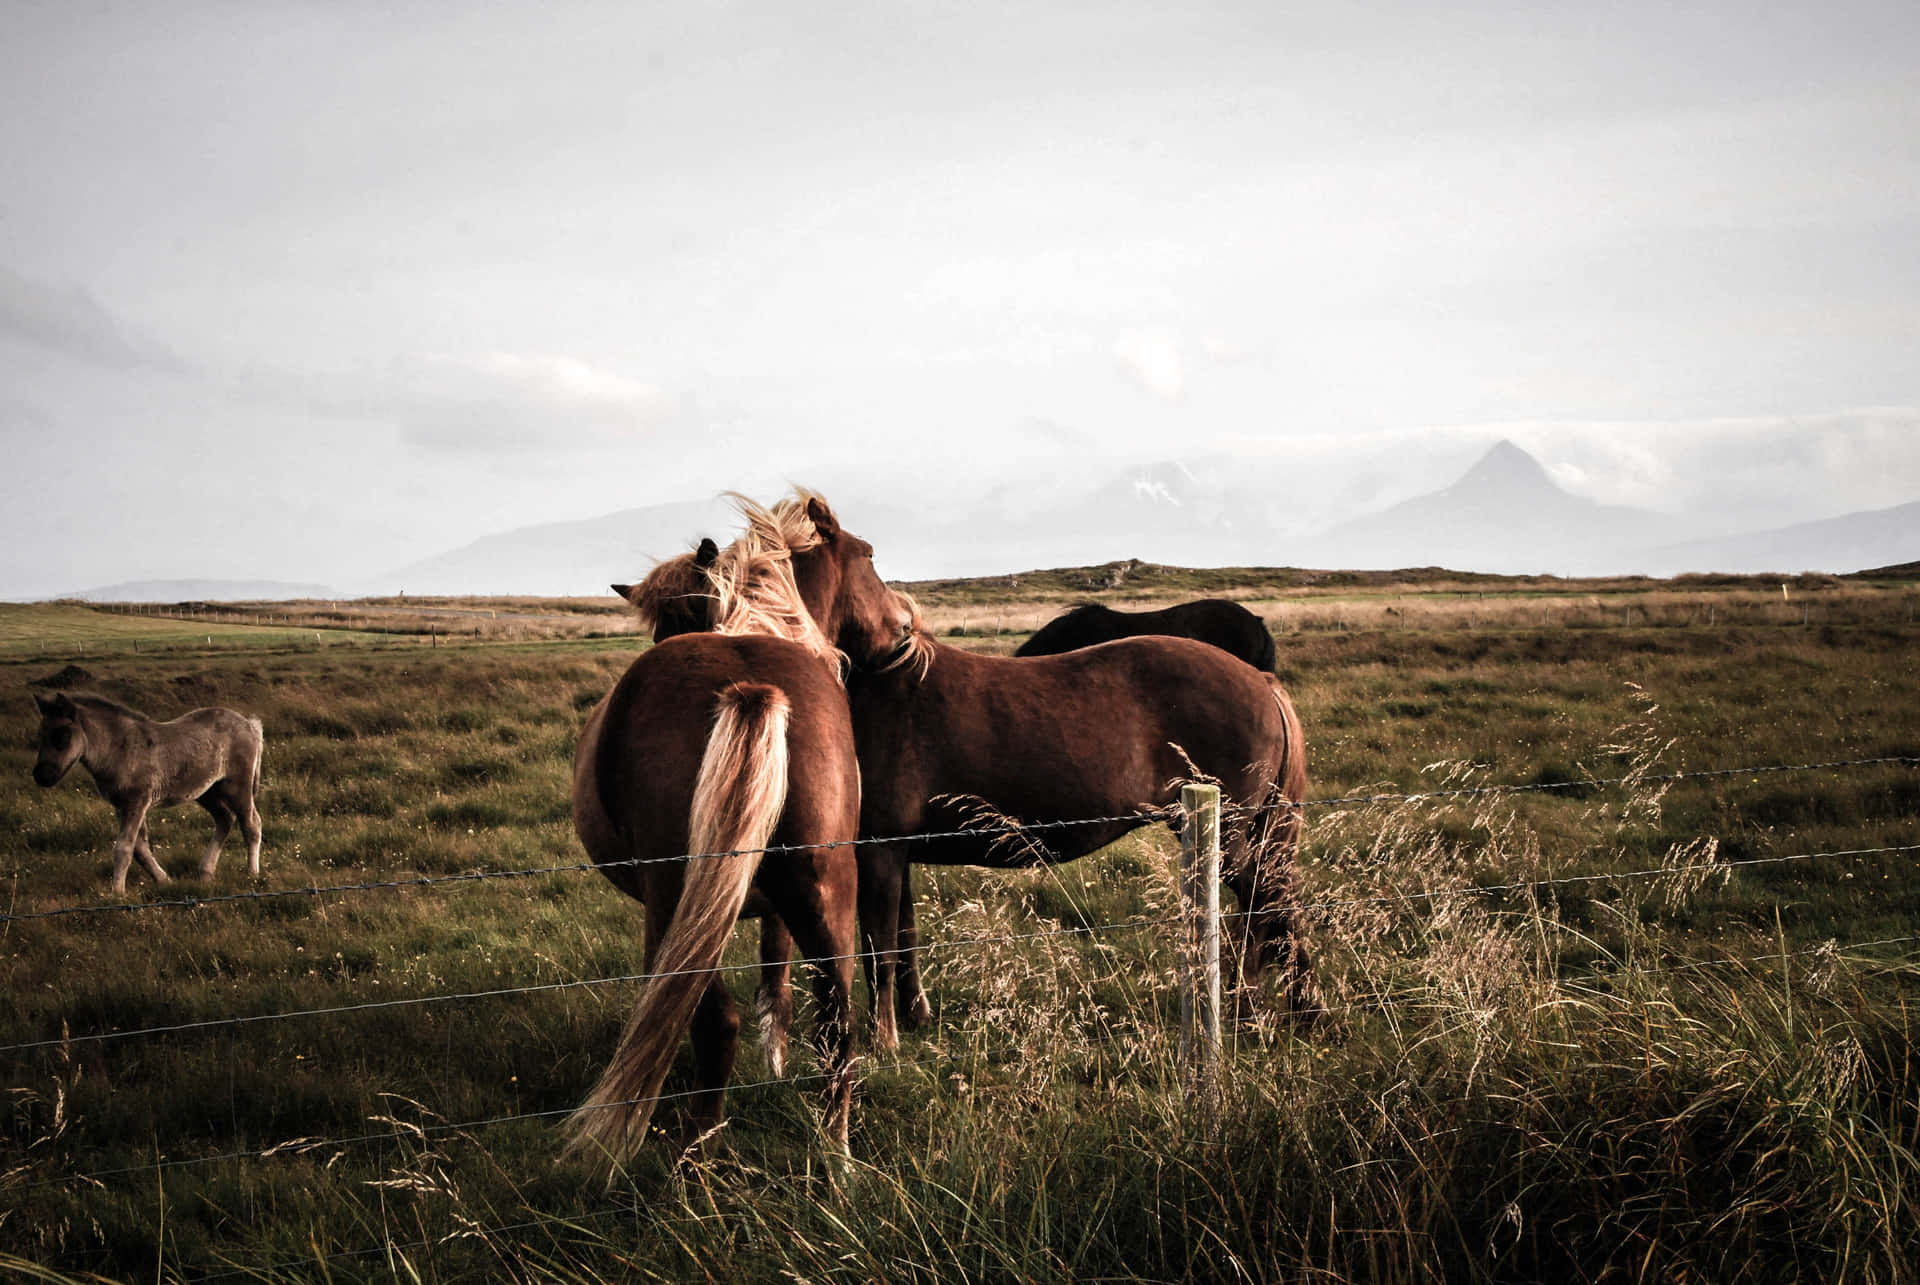 “A Majestic Scene of Beautiful Horses"